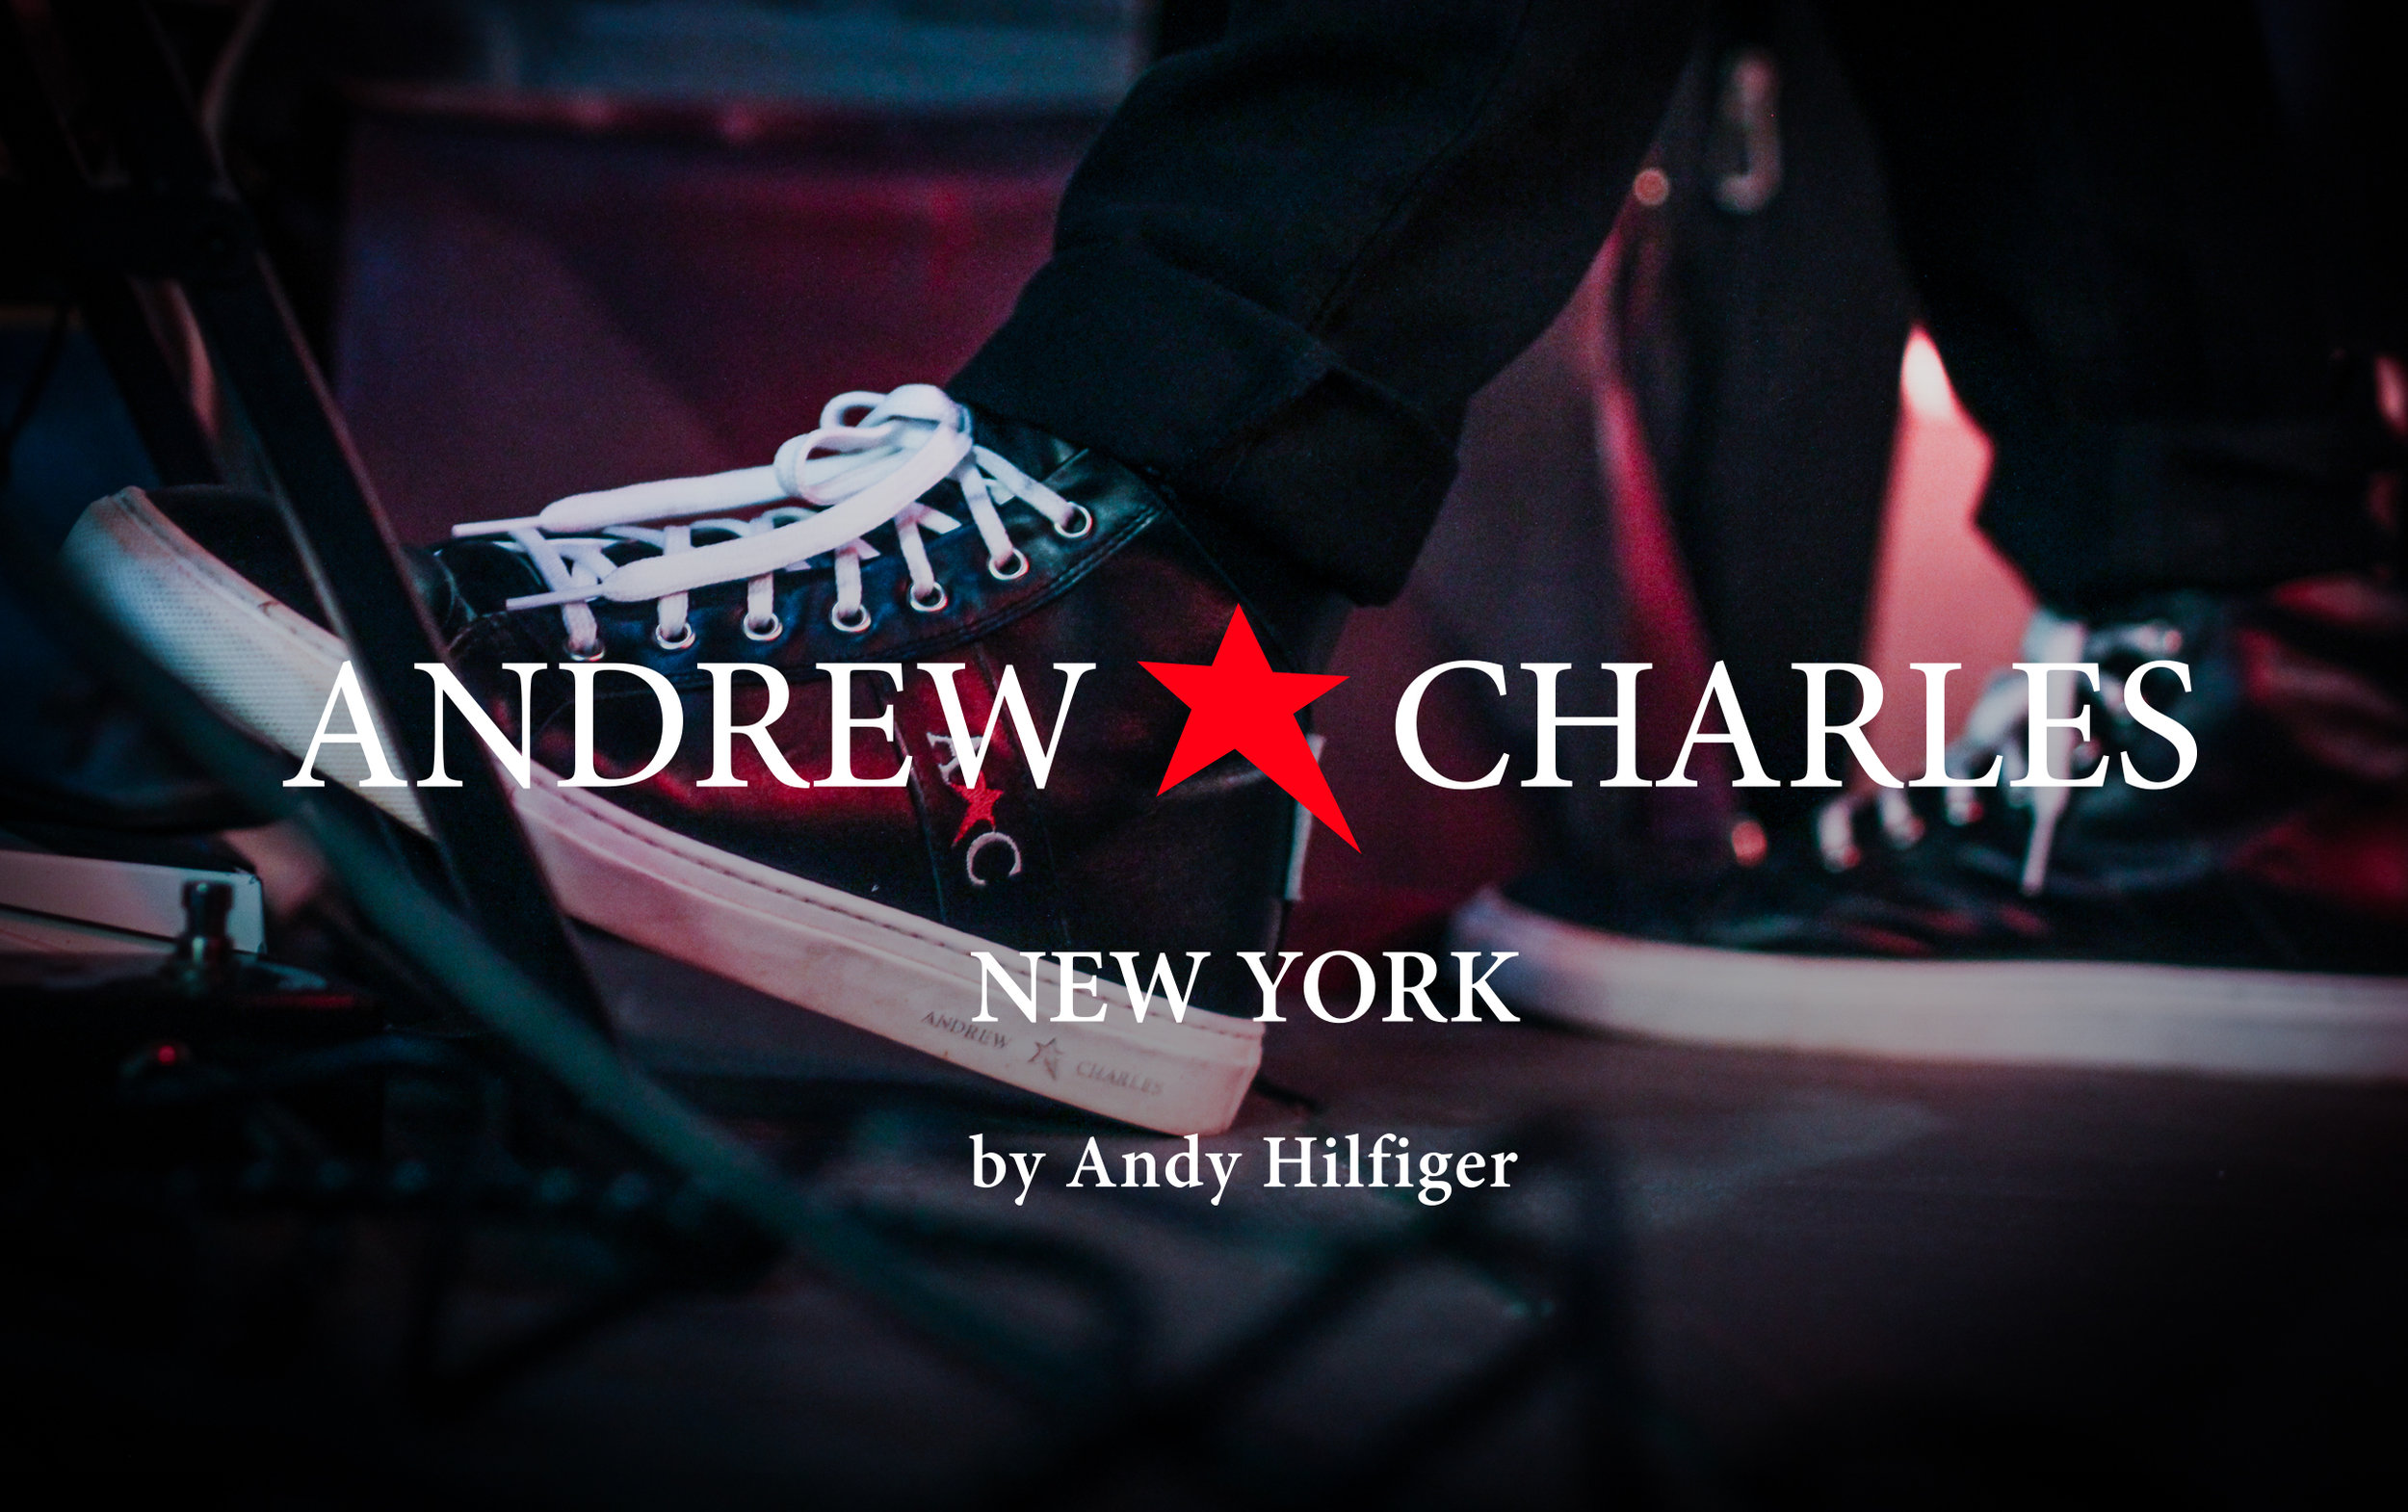 ANDREW CHARLES